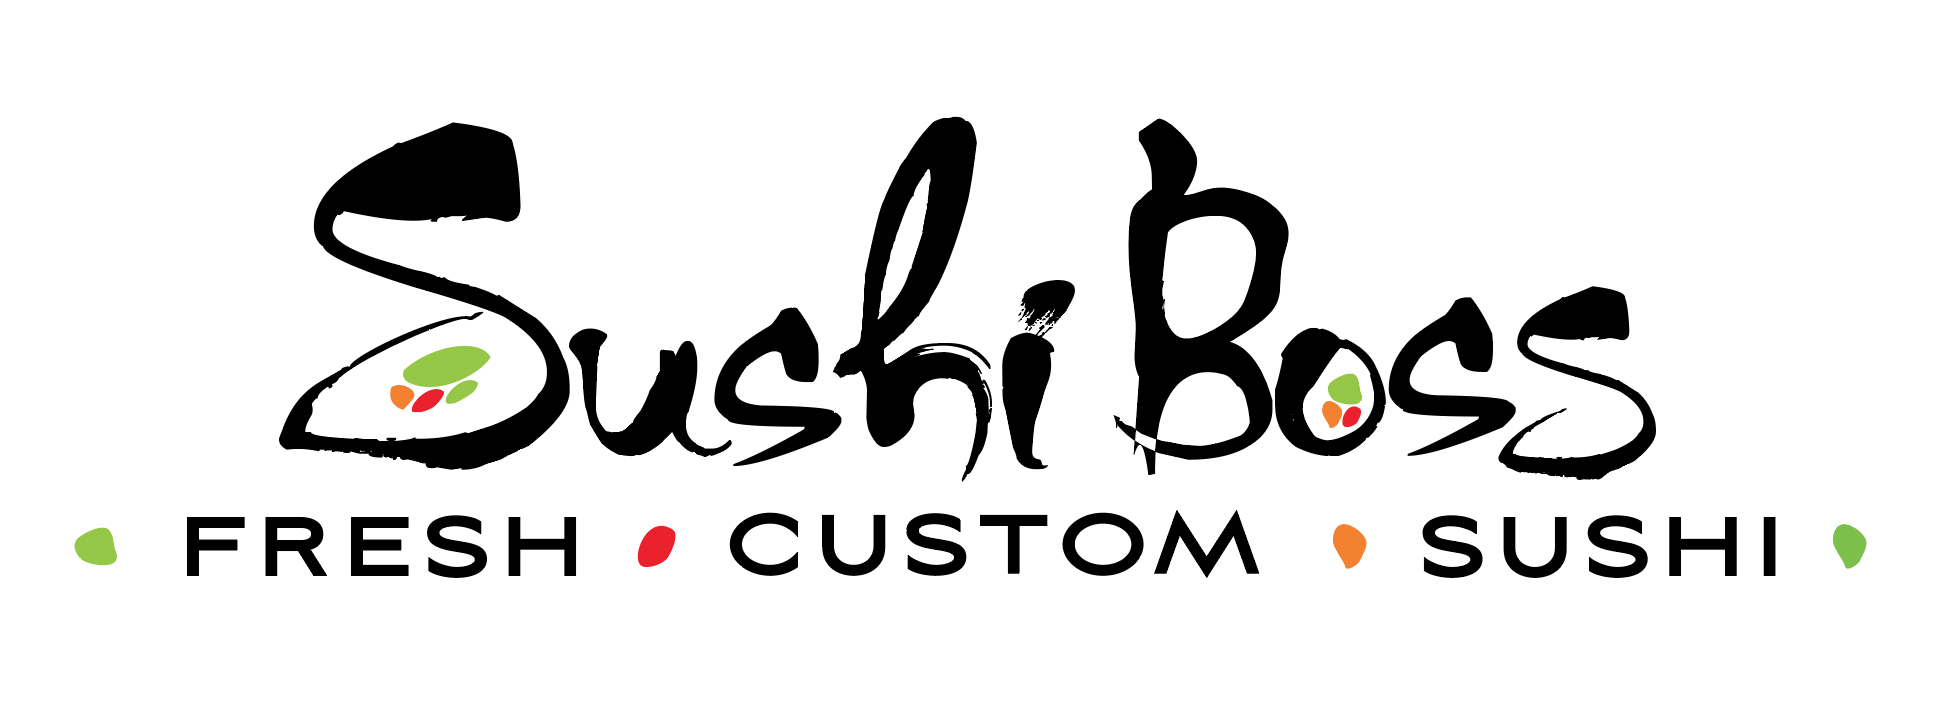 sushi-boss-logo-black.jpg